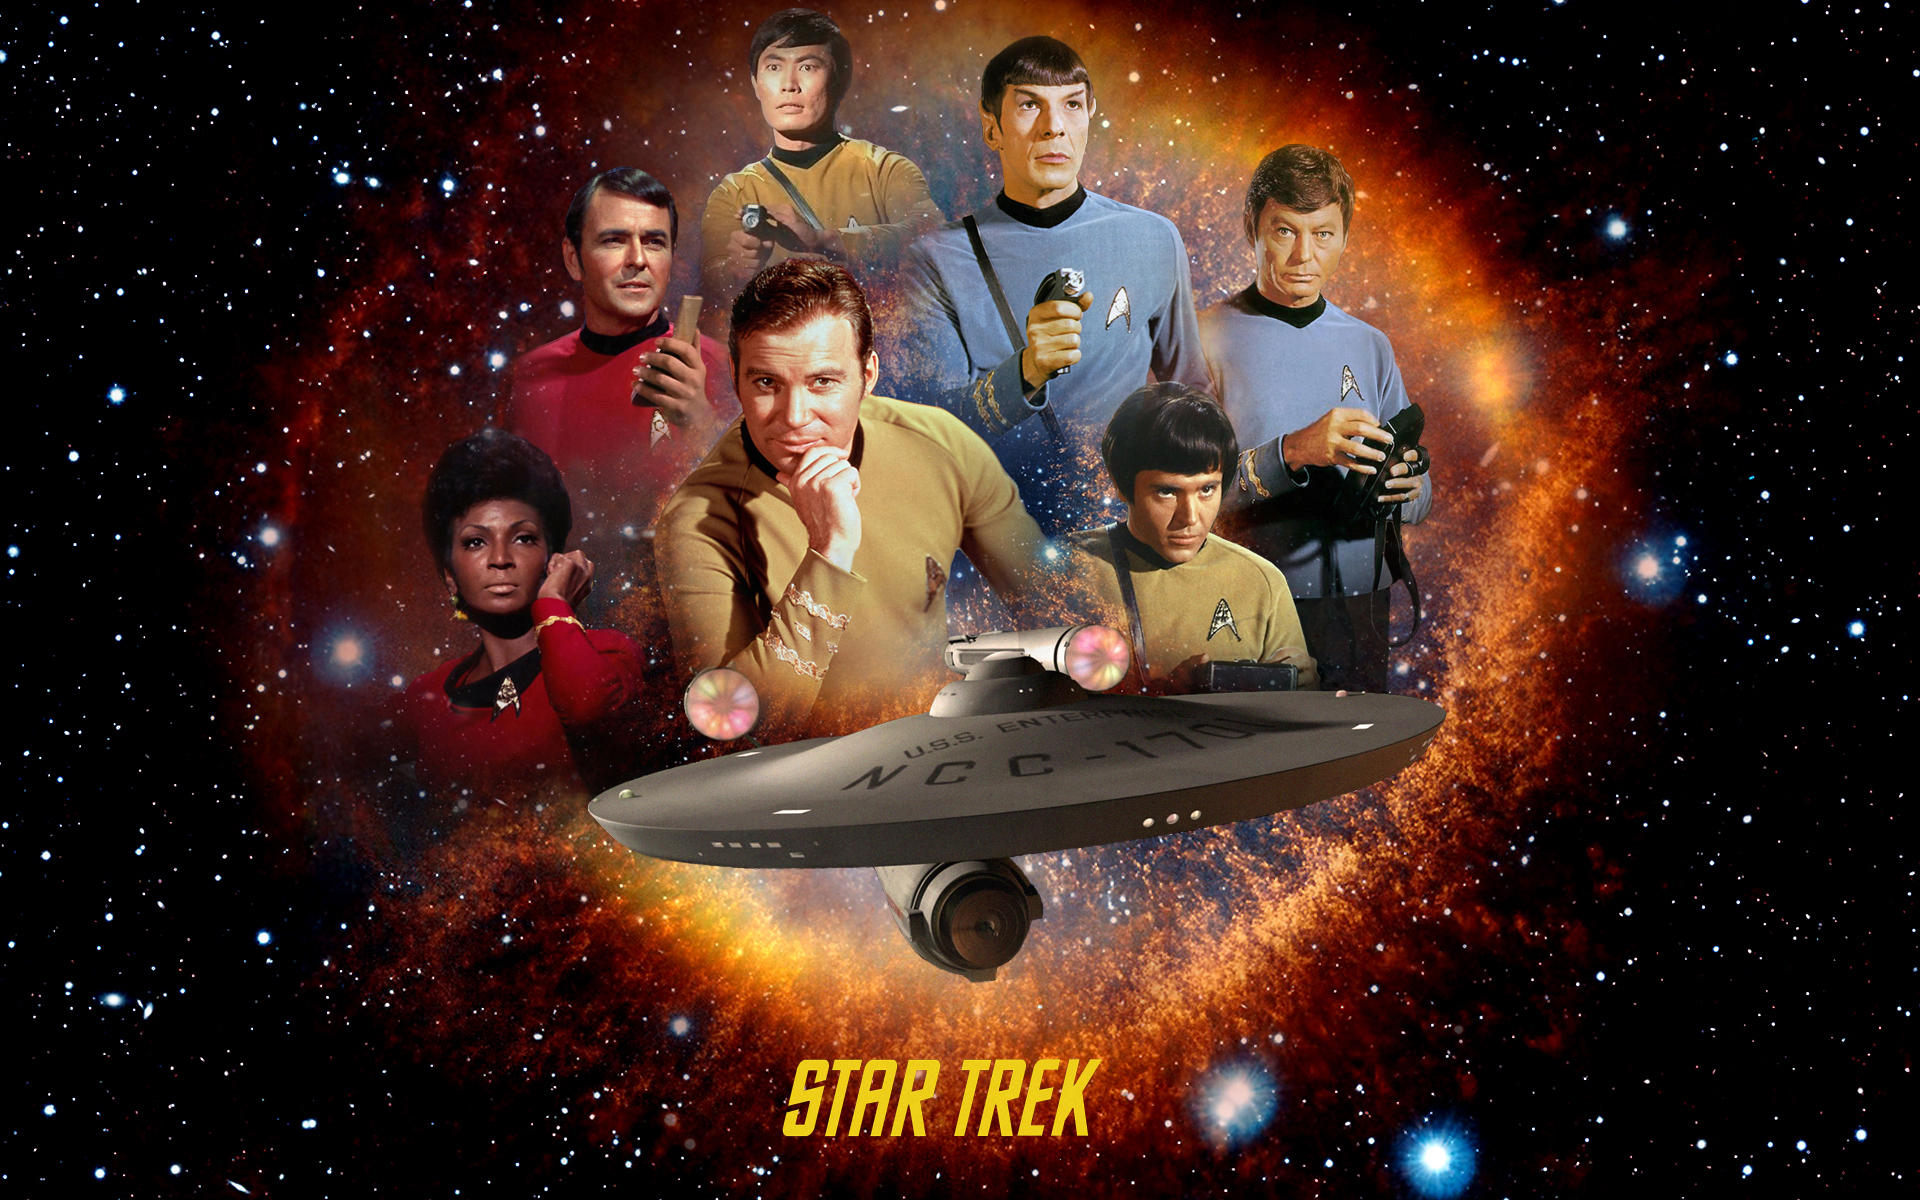 Amazing Star Trek: The Original Series Pictures & Backgrounds